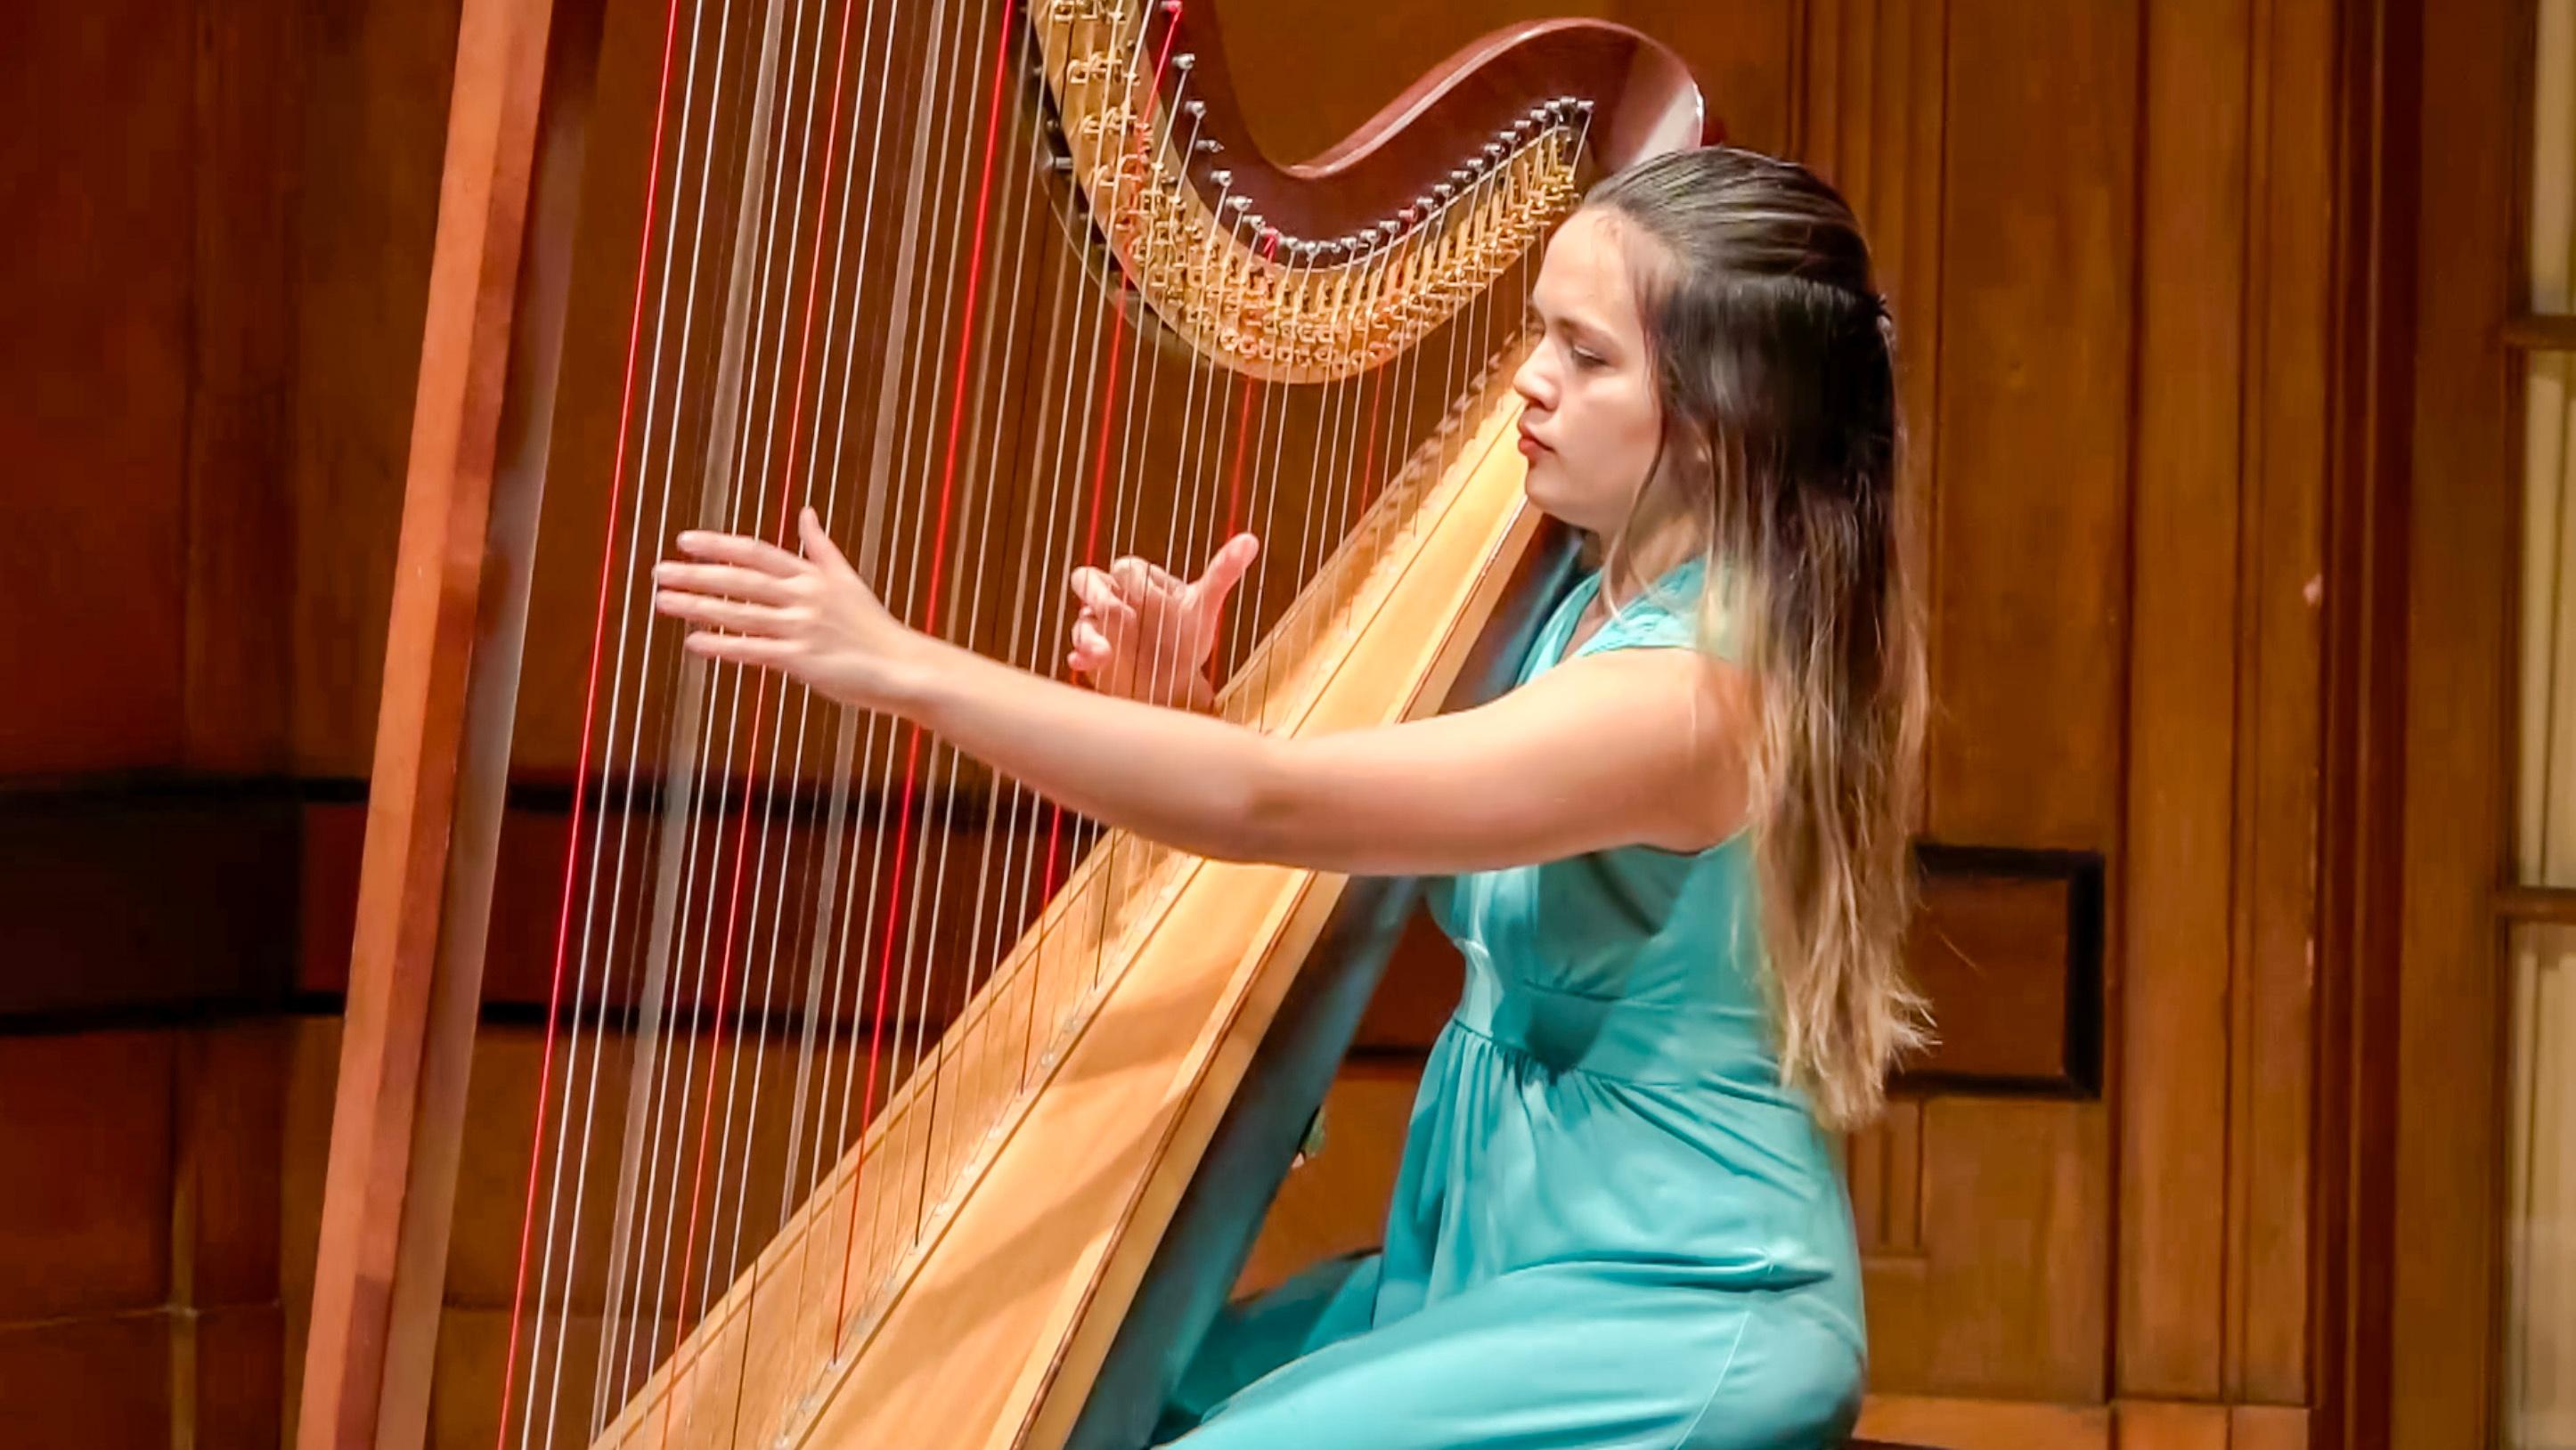 How Joanna Newsom made the harp hip, Folk music